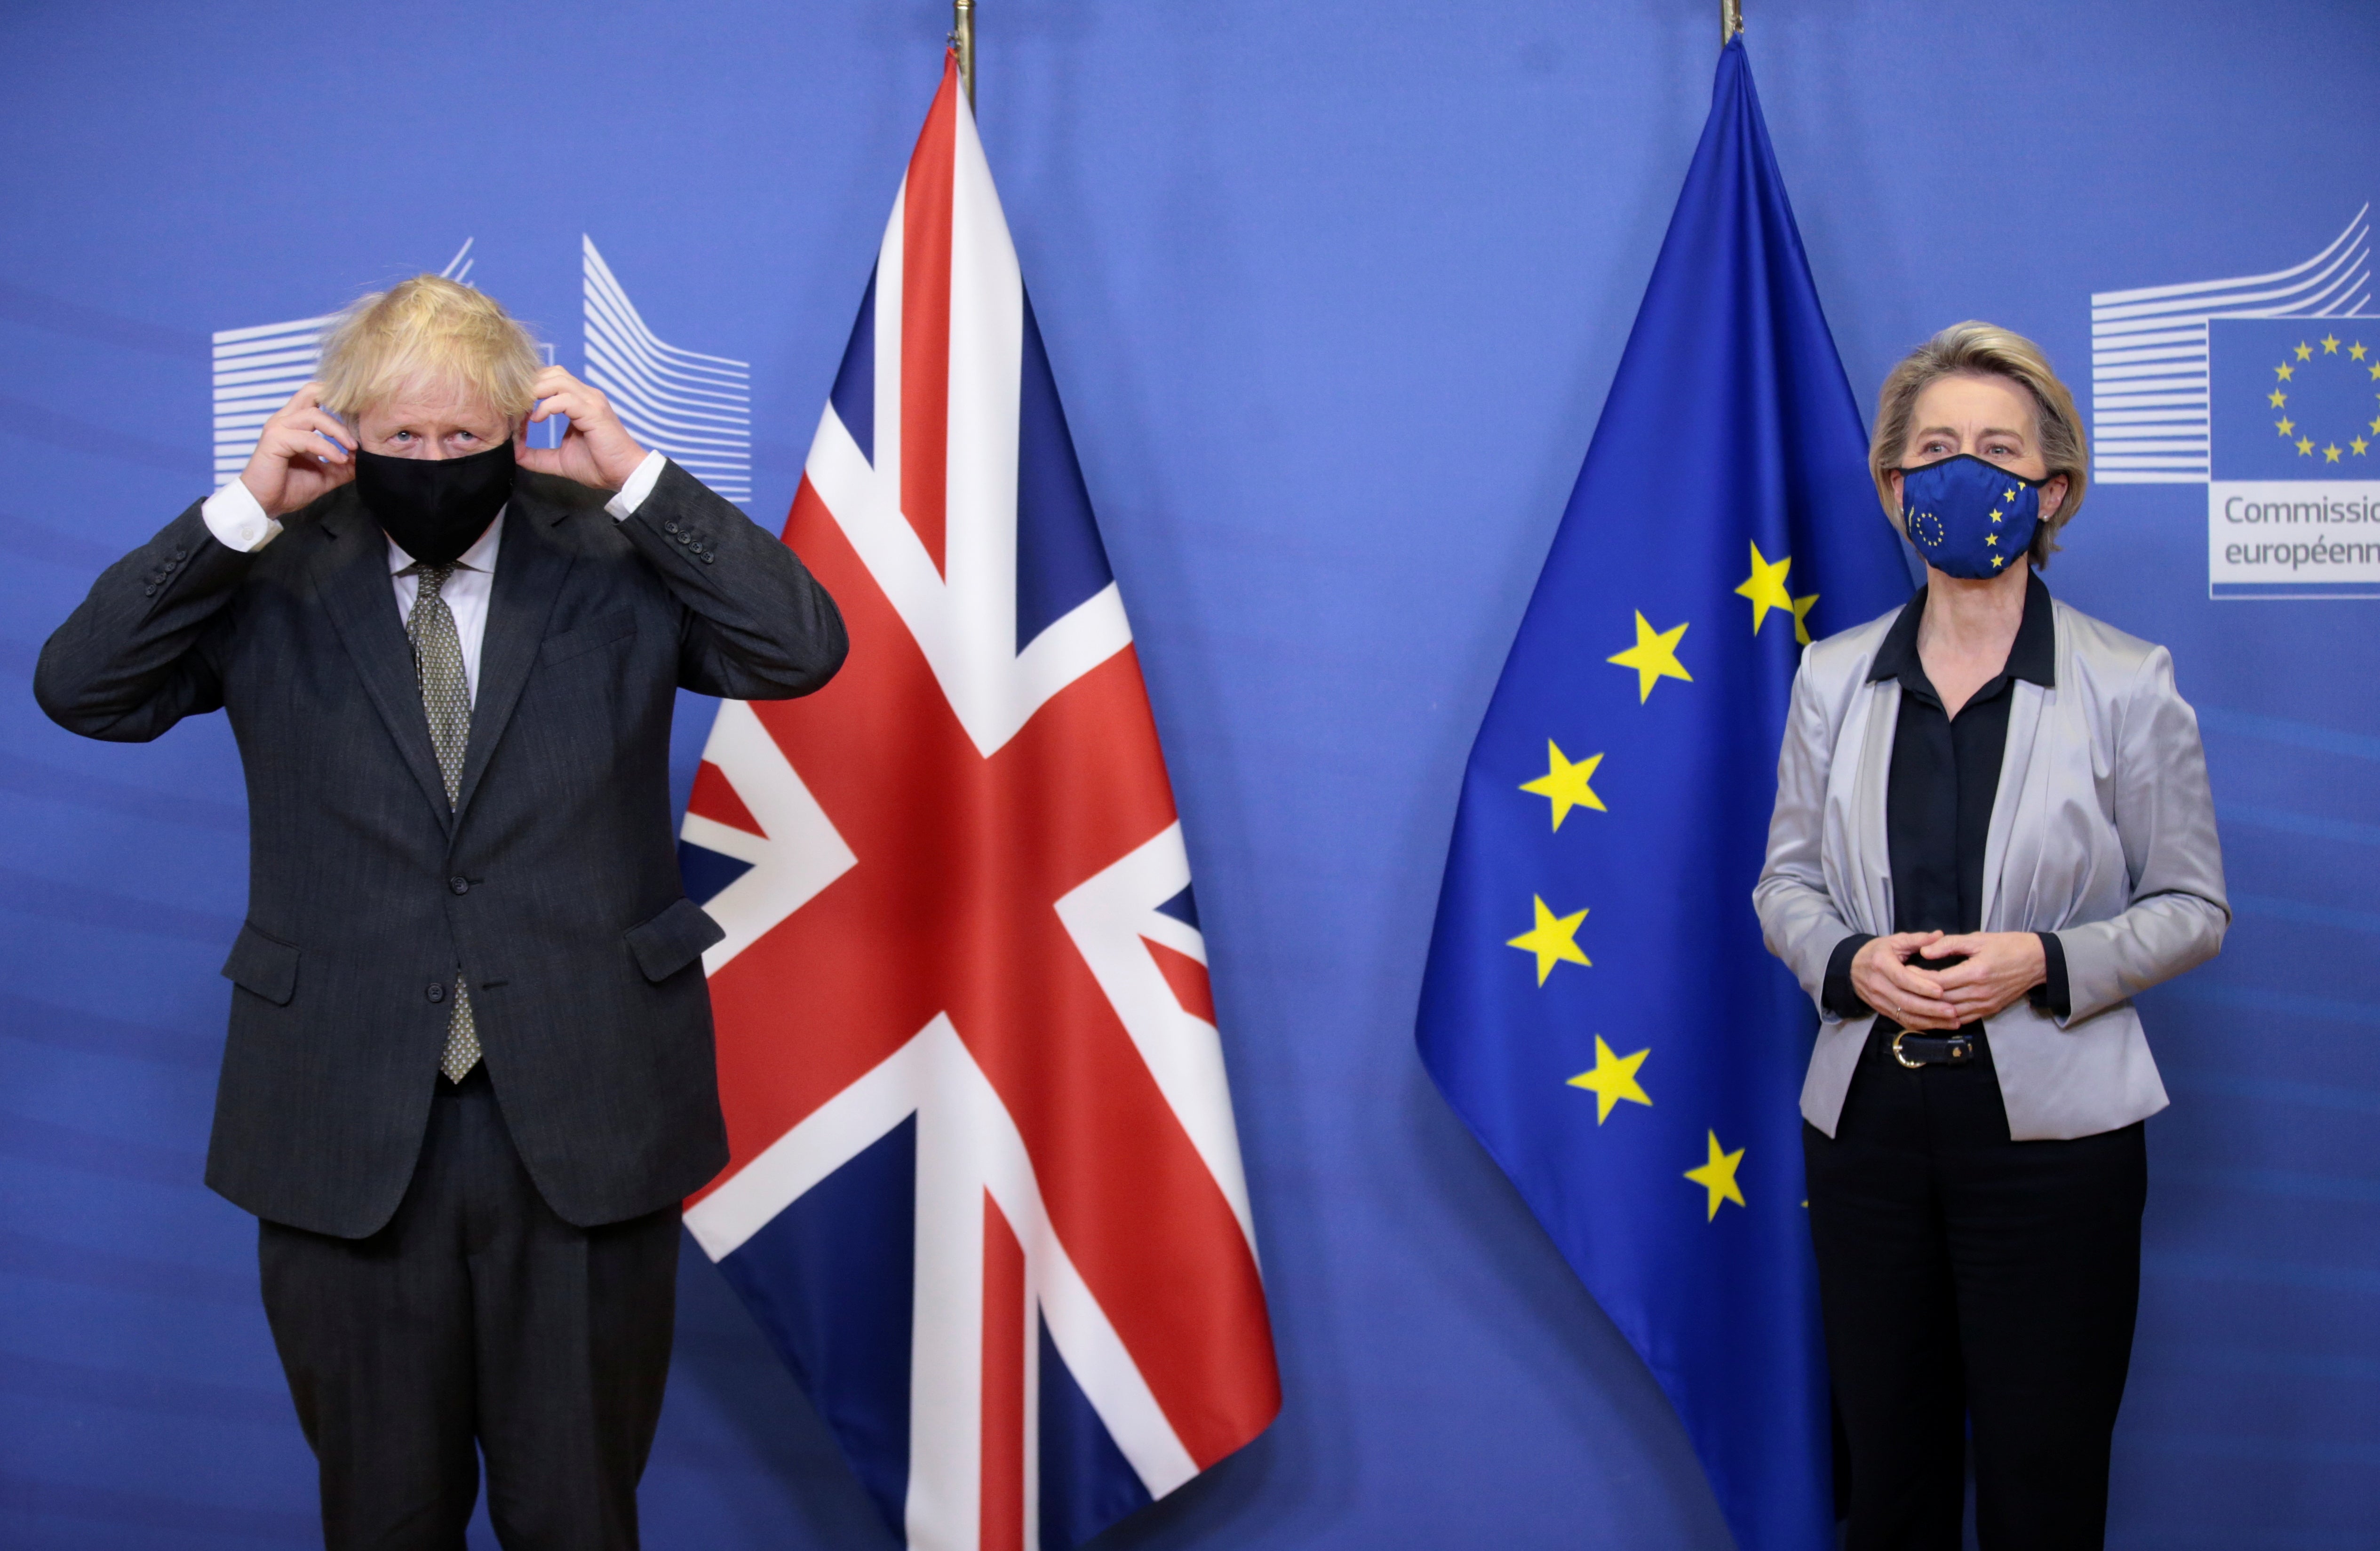 Boris Johnson and Ursula von der Leyen will have to resolve the issue directly, MEPs were told